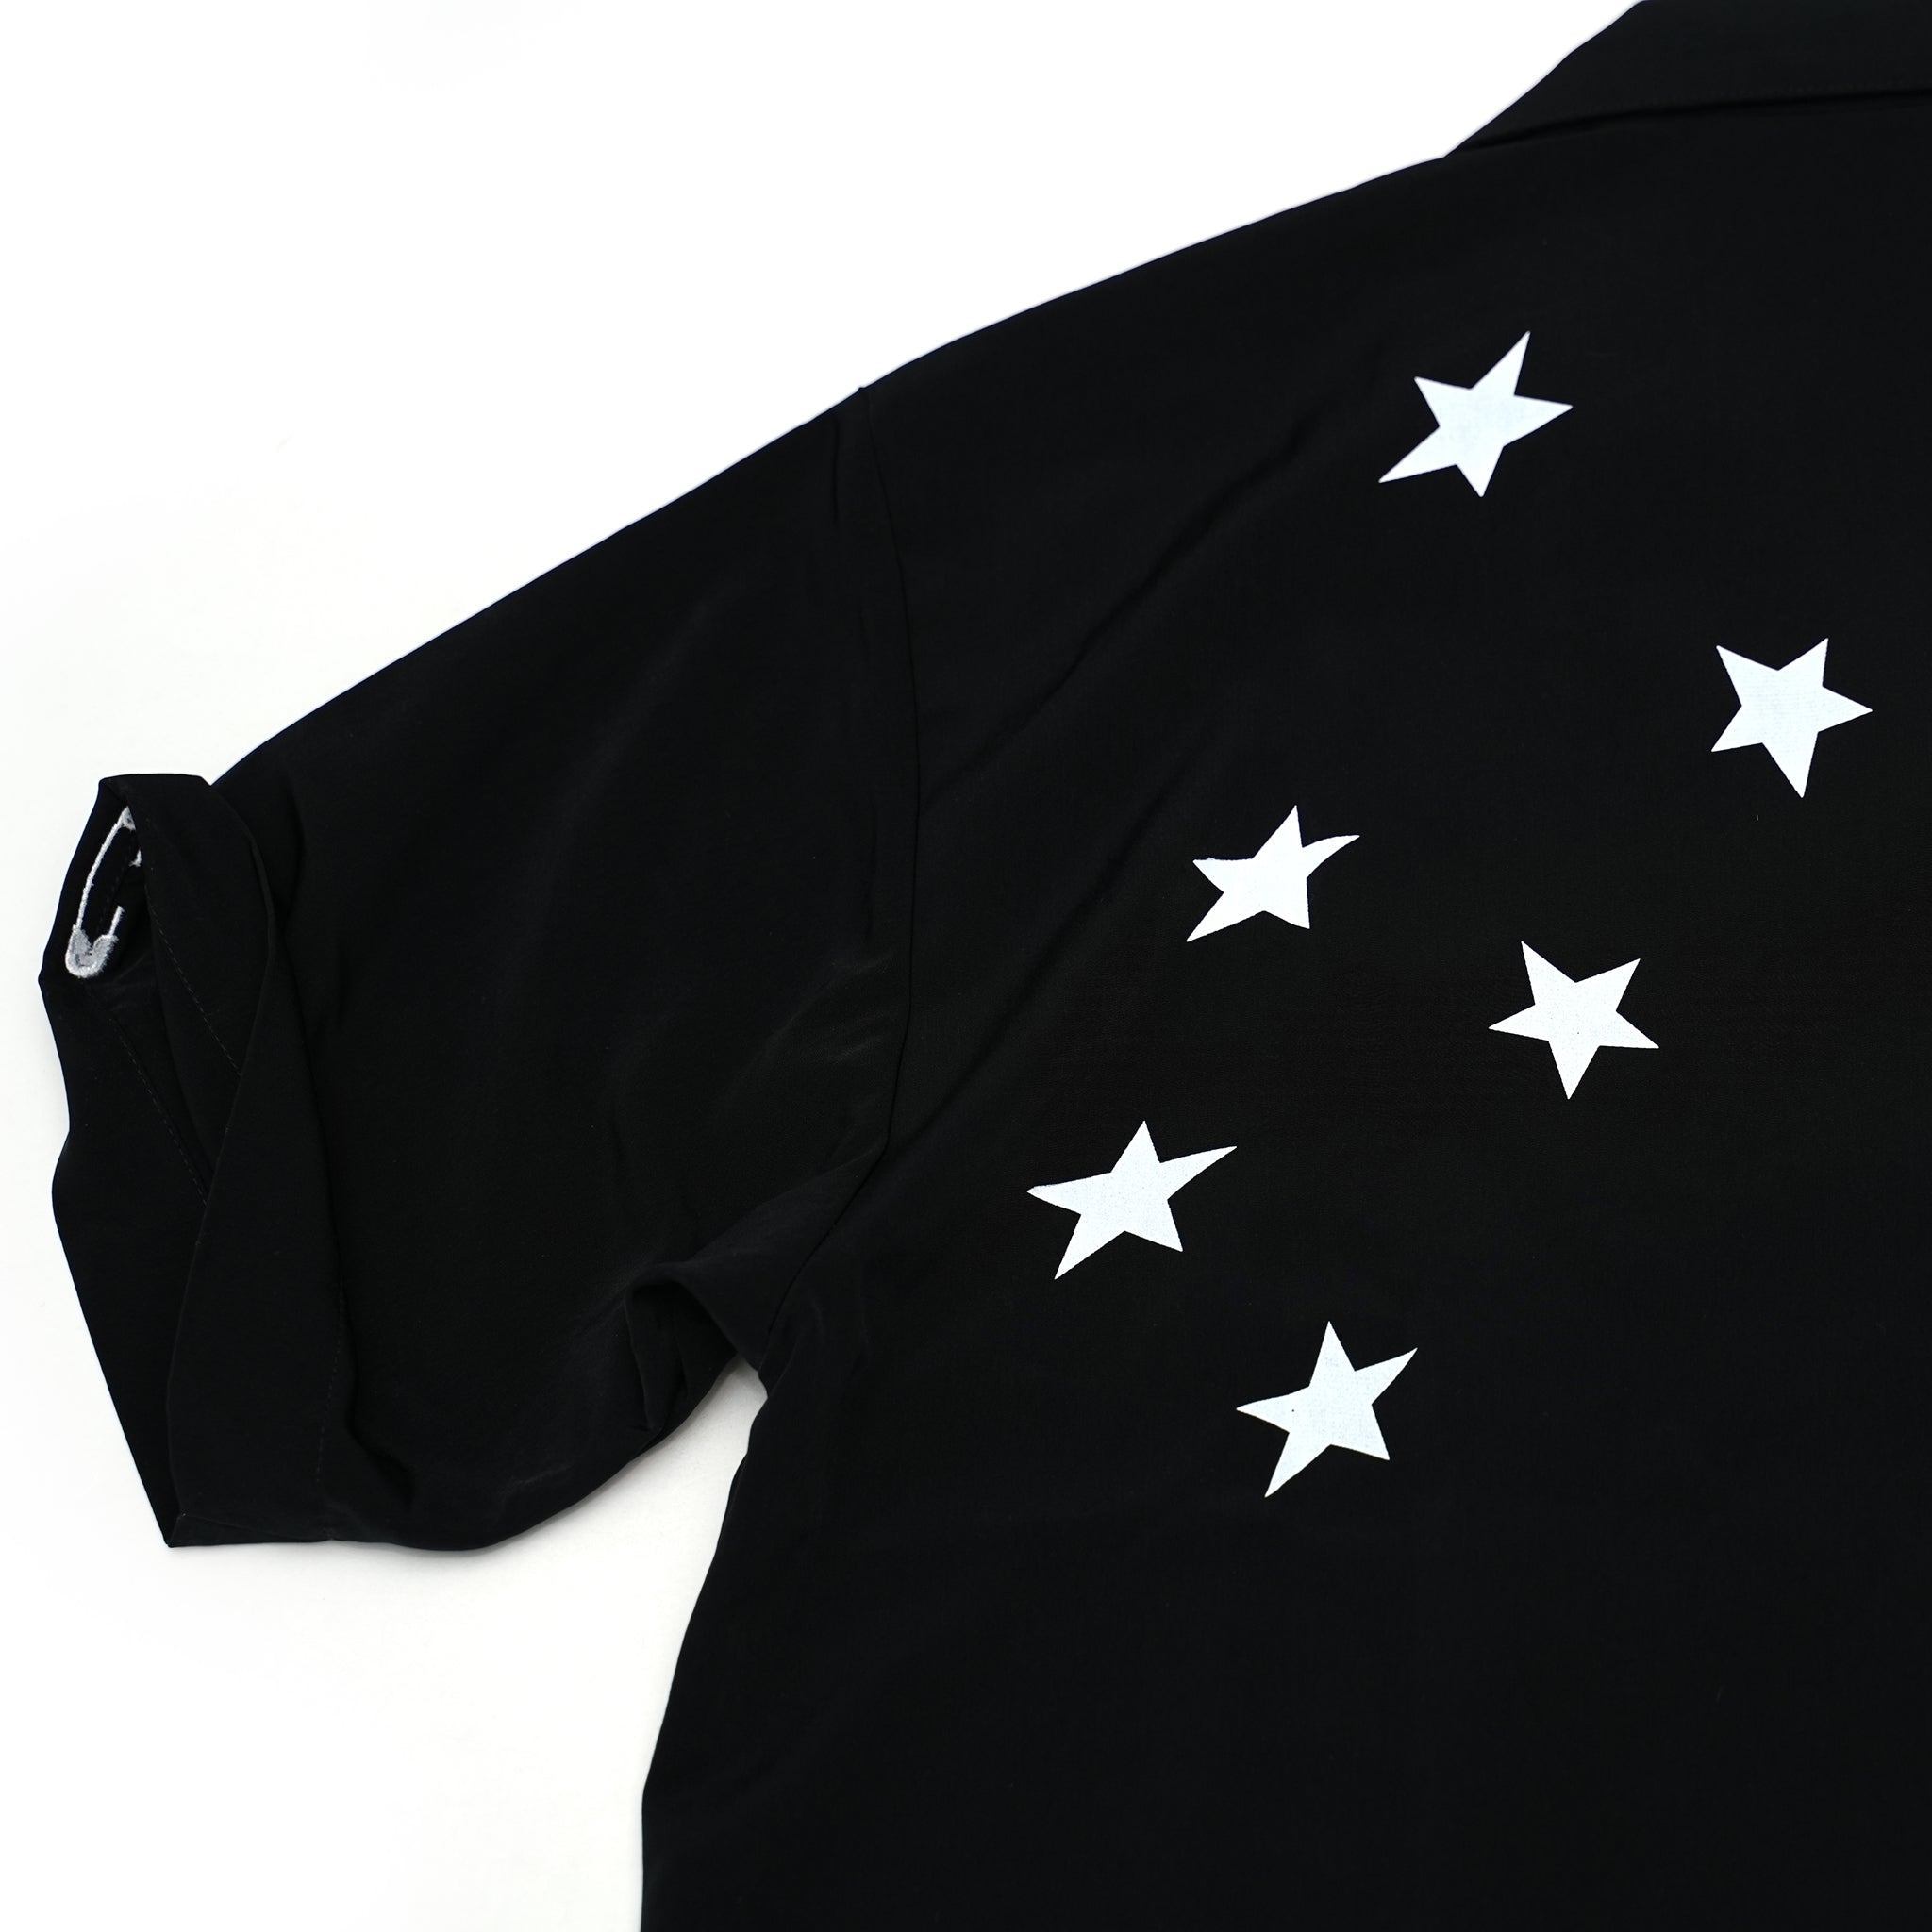 No:SH465 | Name:英国反逆分子 Open Collar Shirts | Color:Sax/Black | Size:L/XL |【ORIGINAL JOHN_オリジナルジョン】